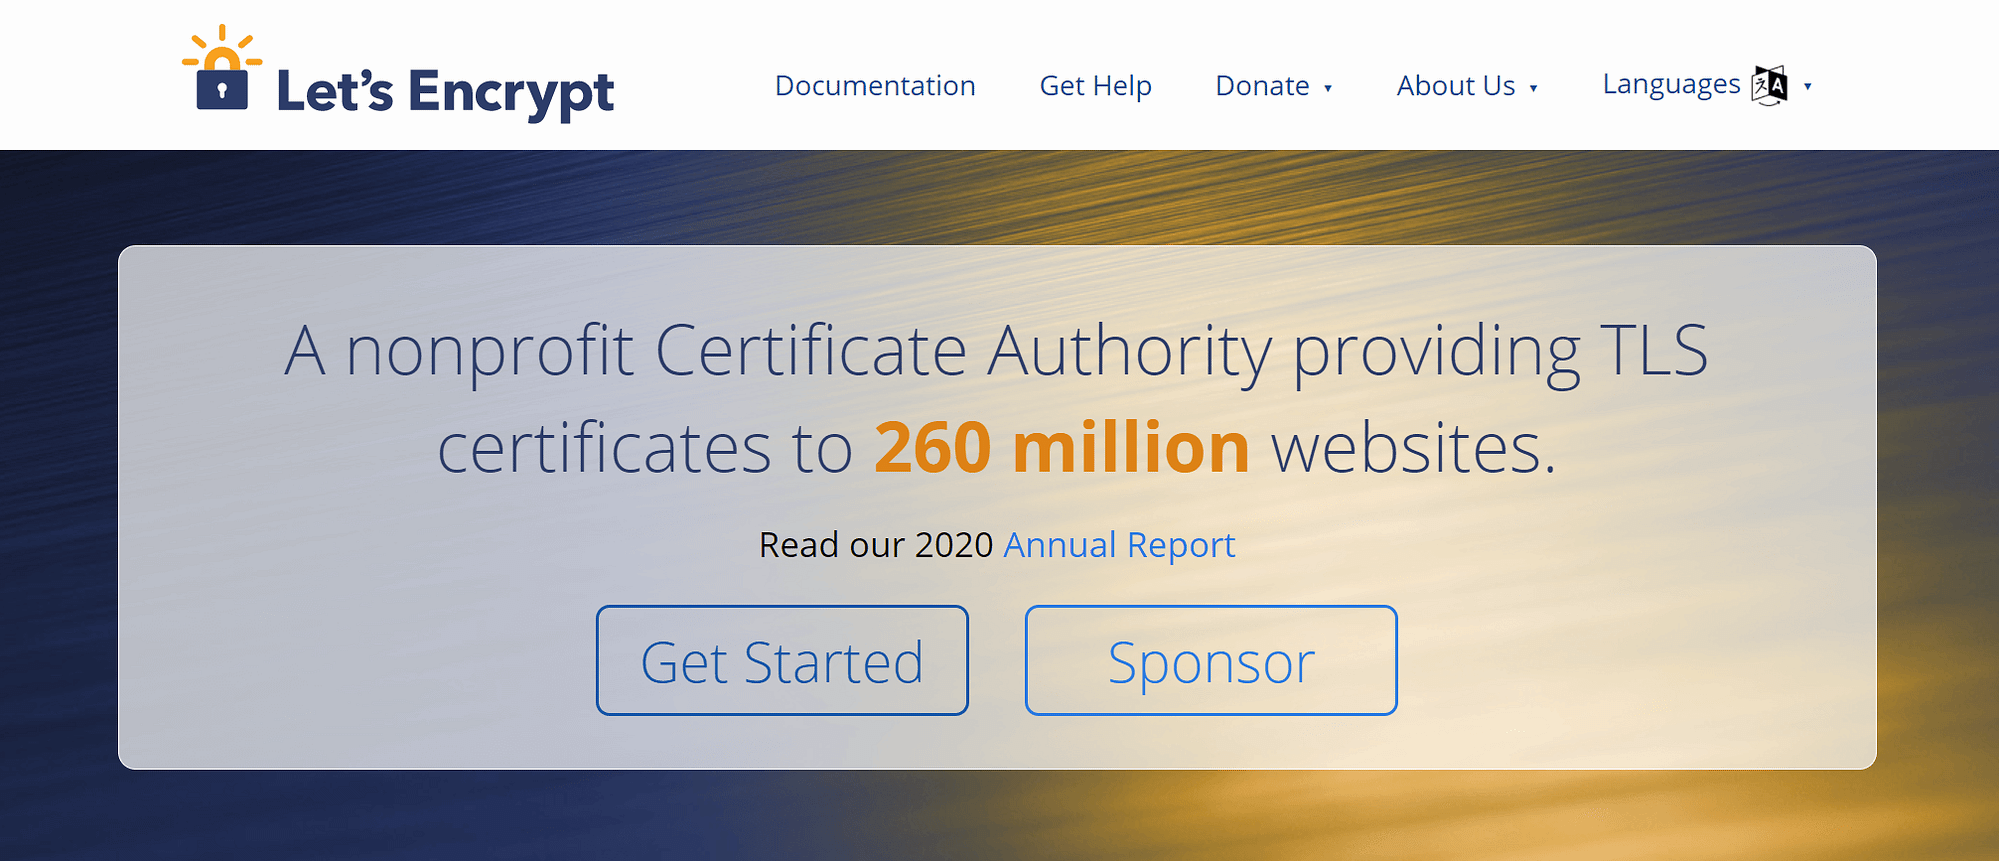 Let's Encrypt 是一個提供免費 SSL 證書的非營利組織